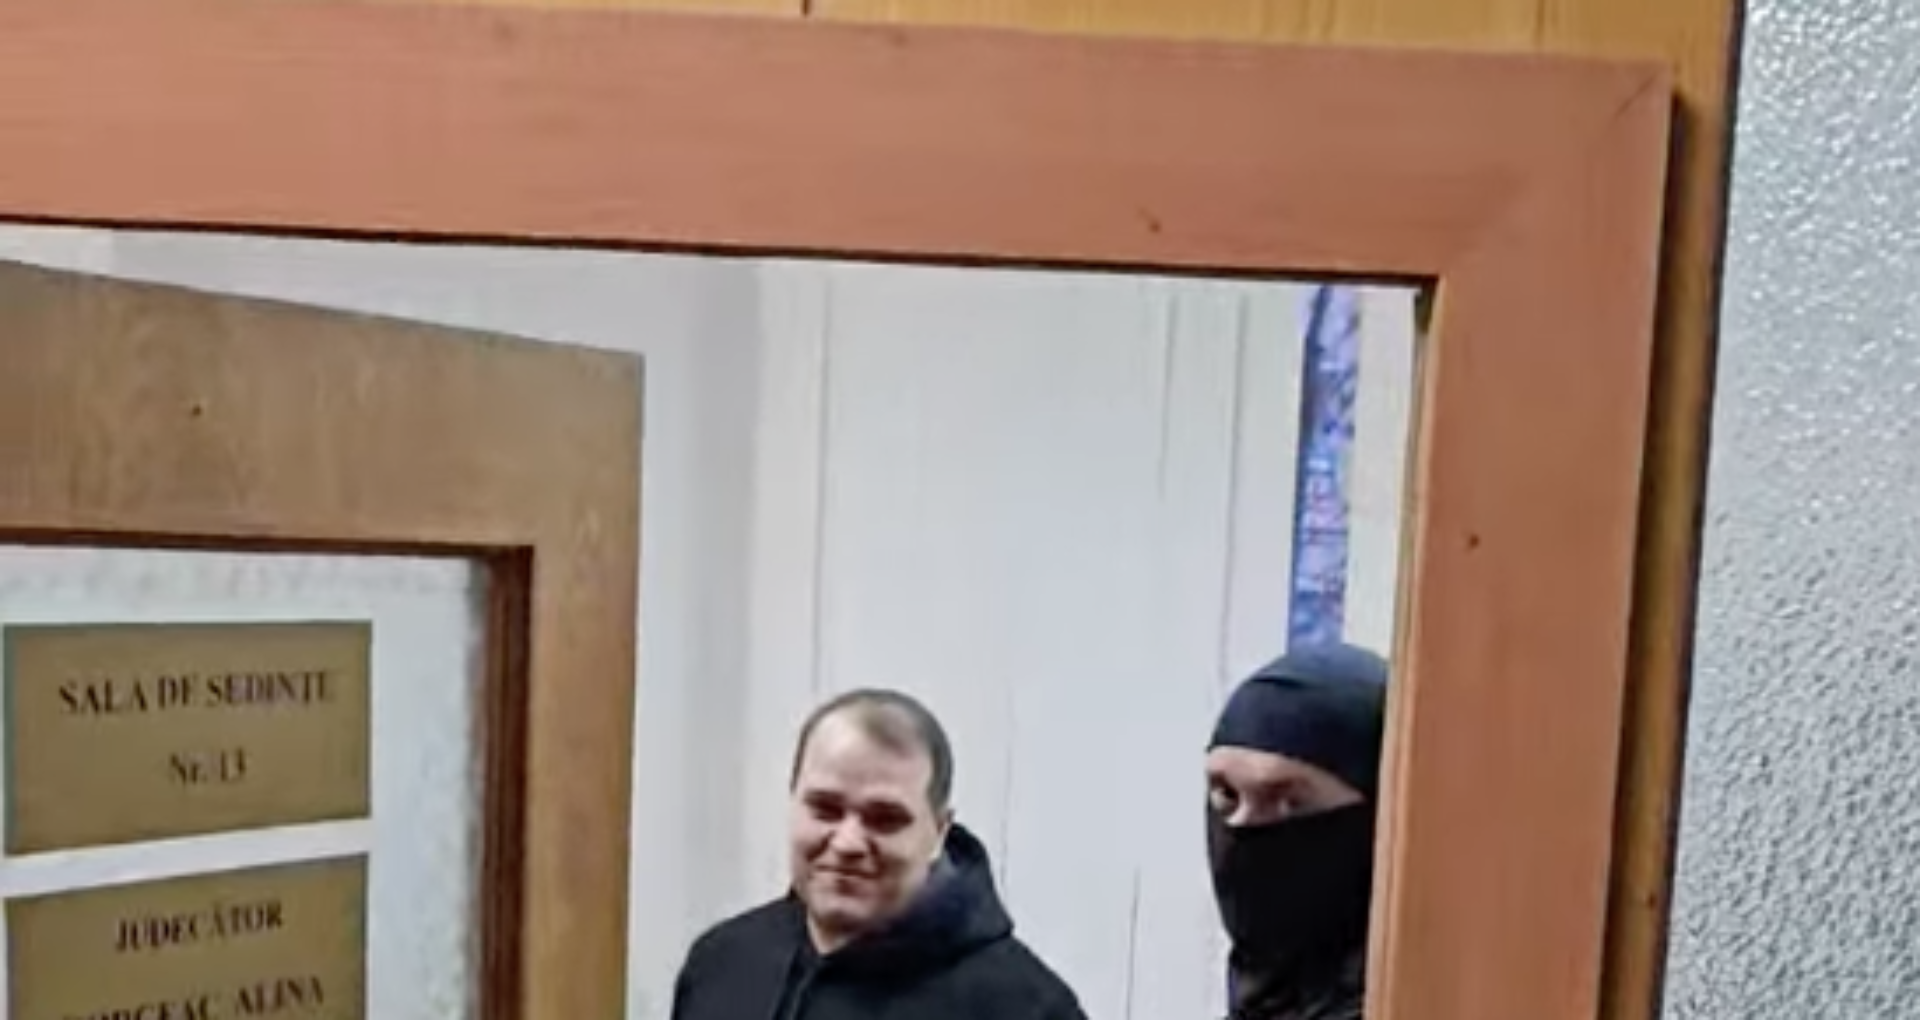 Transfugee MP Alexandr Nesterovschi transferred to house arrest